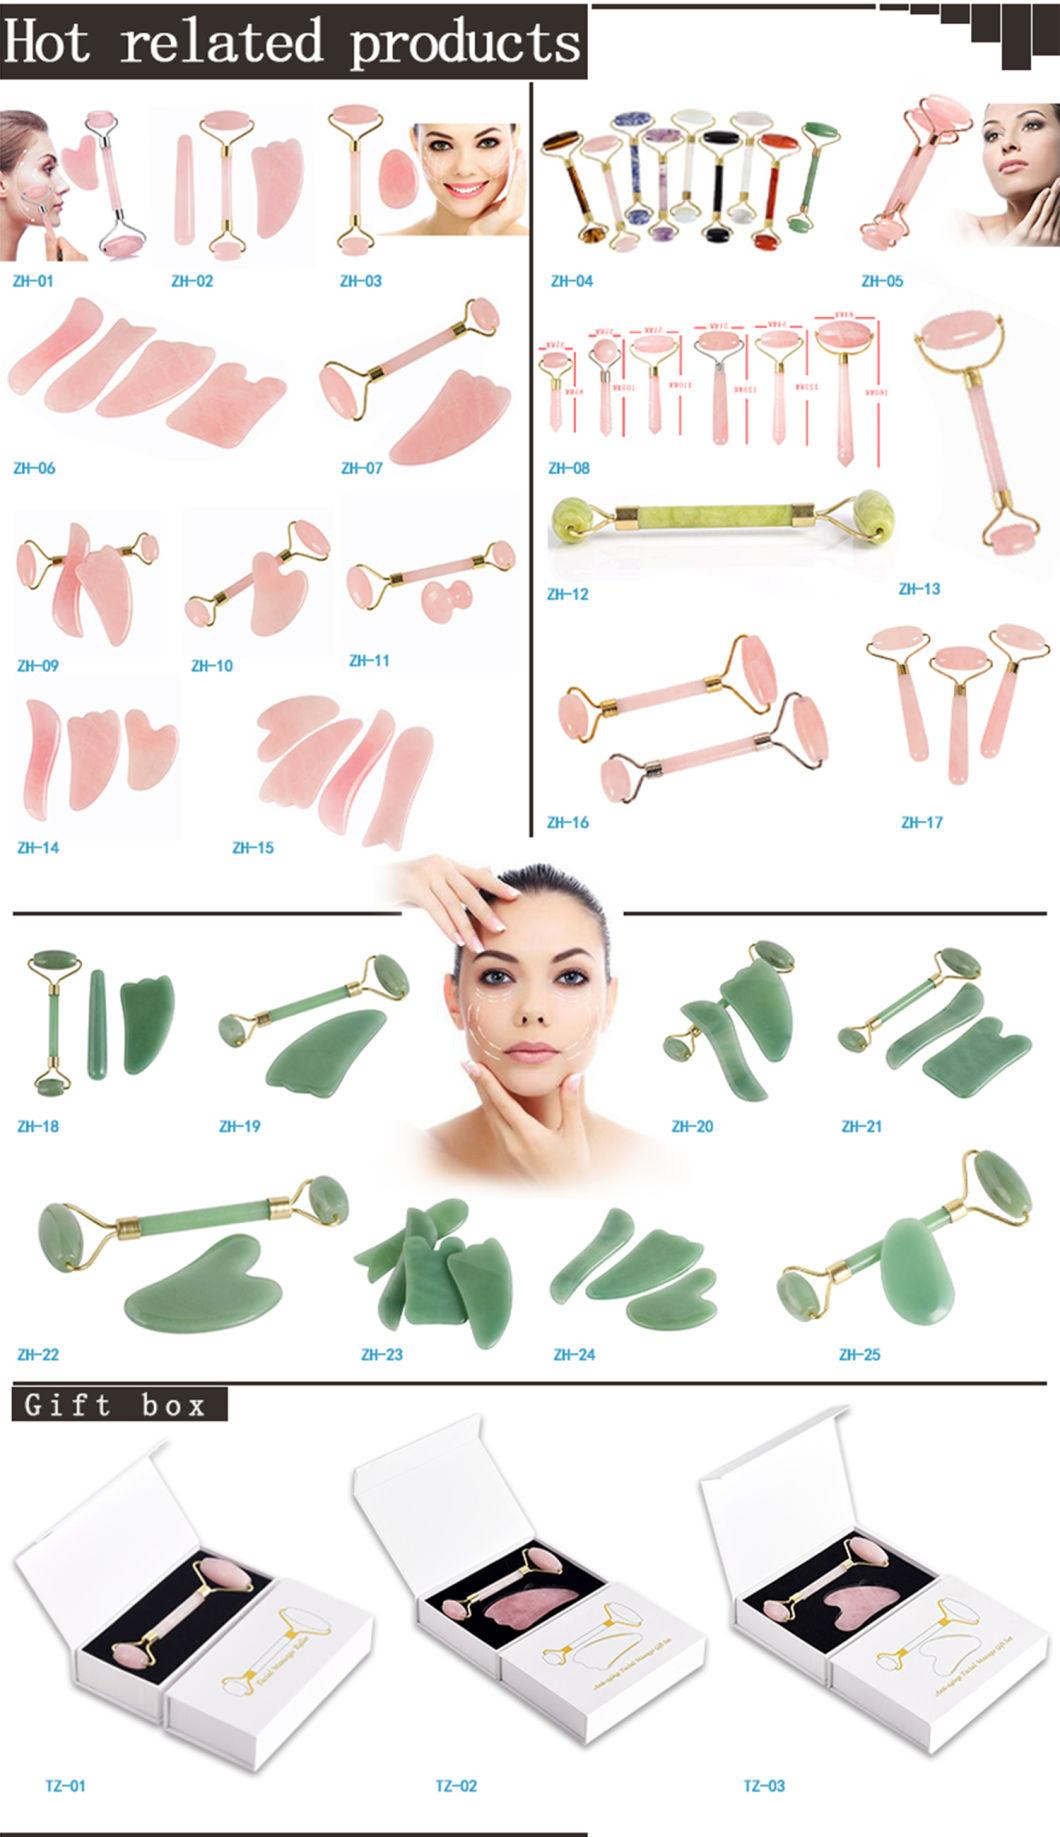 Factory Price Massager Gua Sha Set Skin Facial Care Natual Rose Quartz Jade Roller for Face